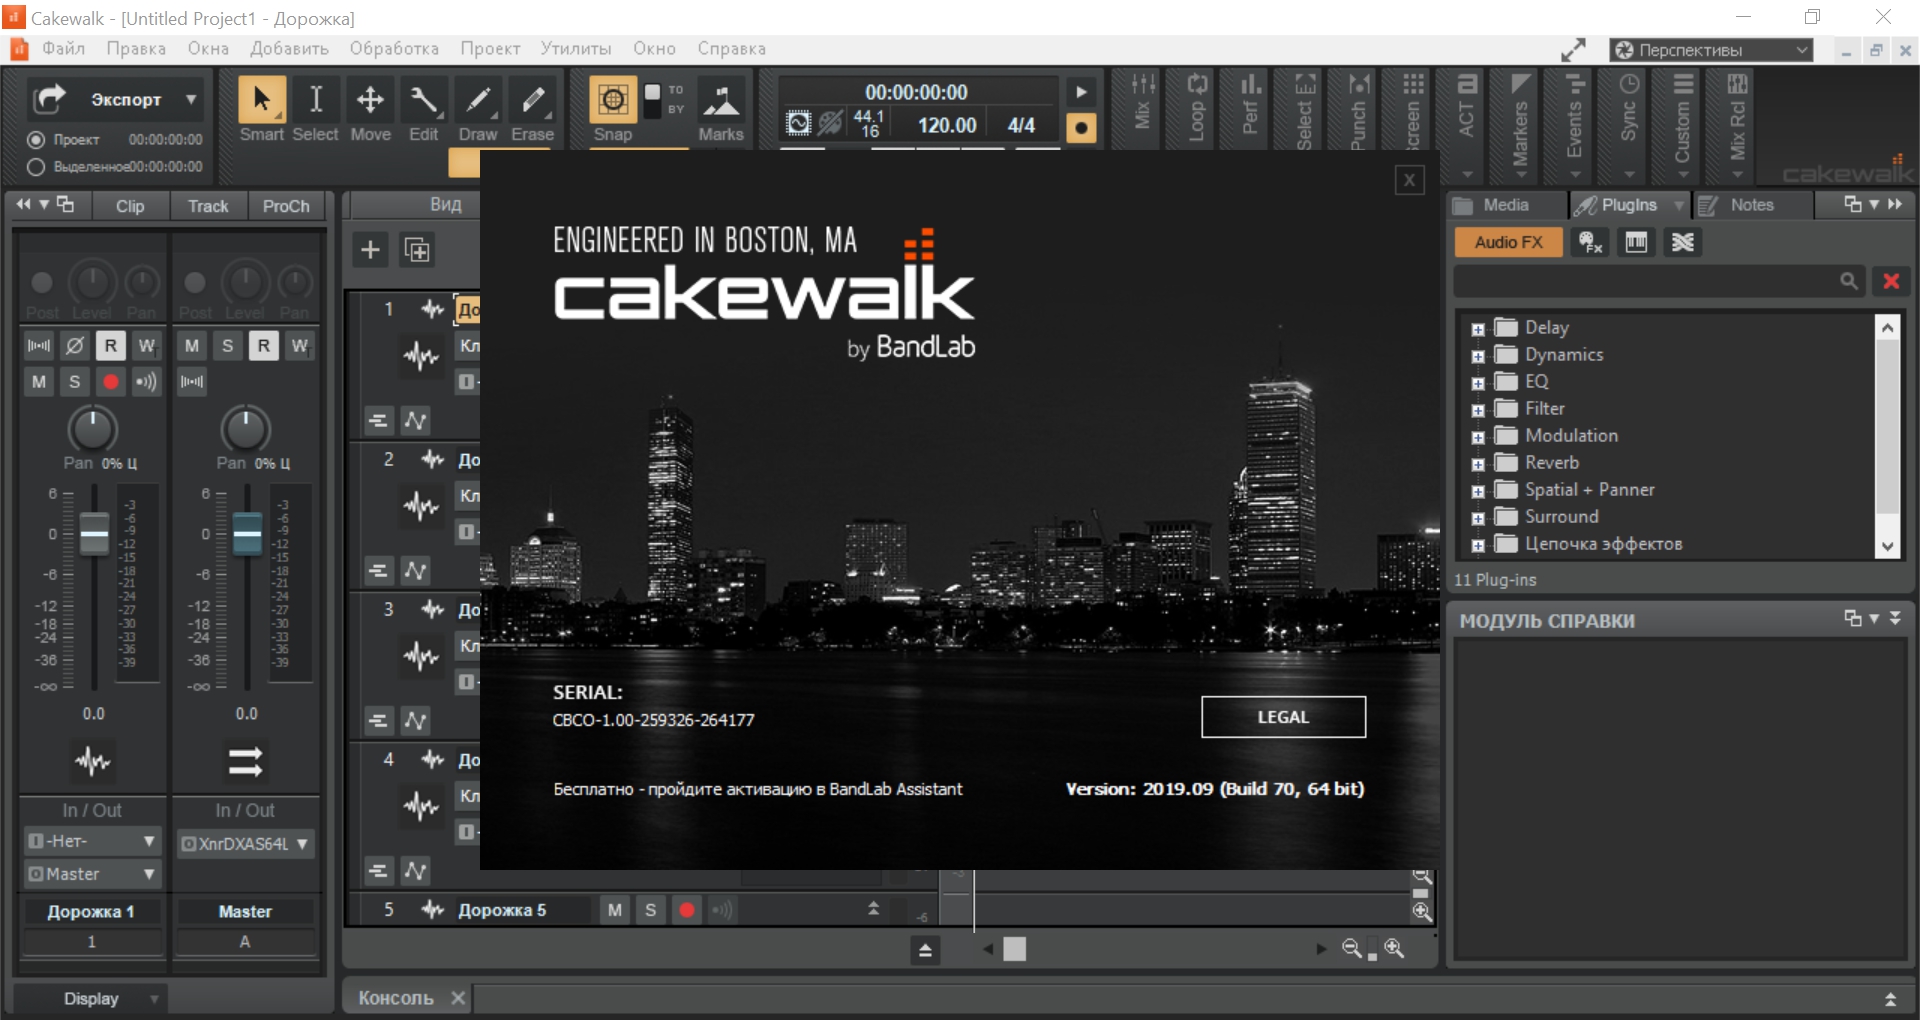 Cakewalk by BandLab 29.09.0.062 for apple download